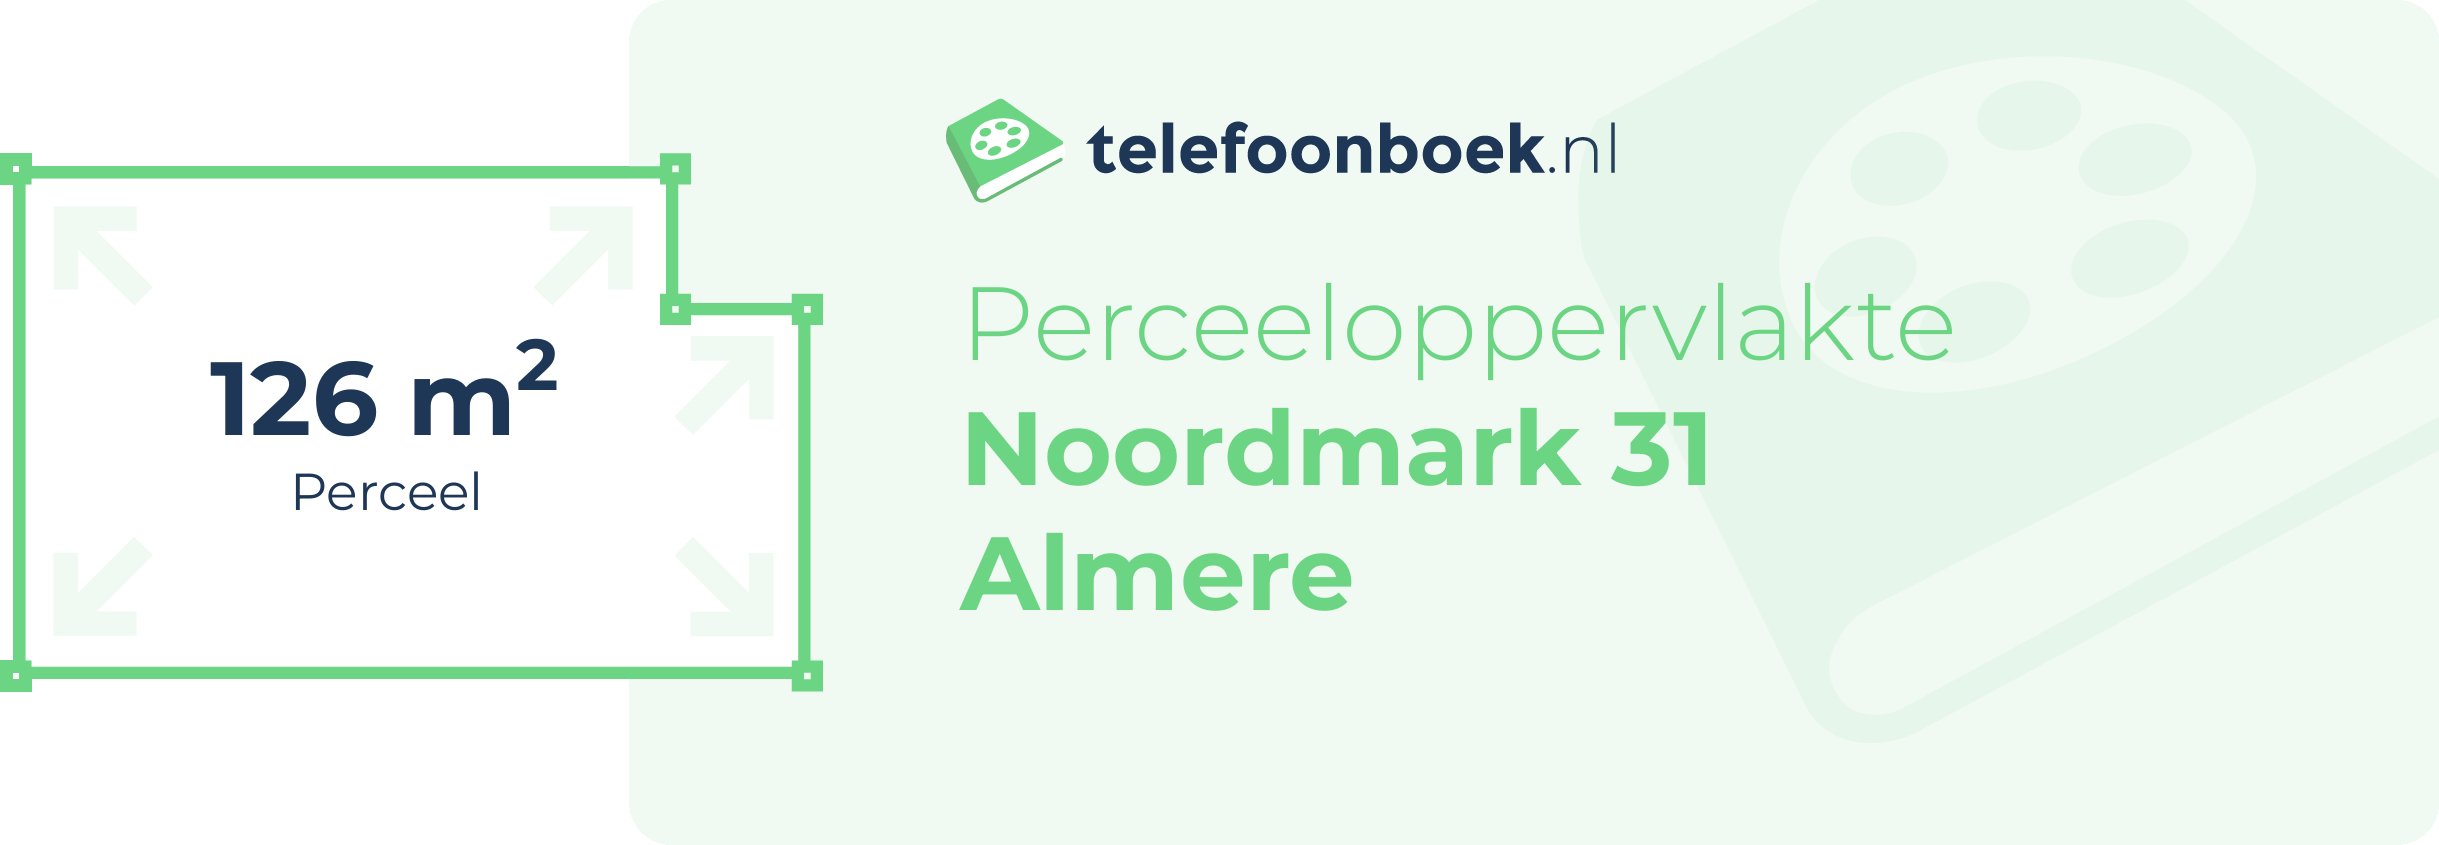 Perceeloppervlakte Noordmark 31 Almere